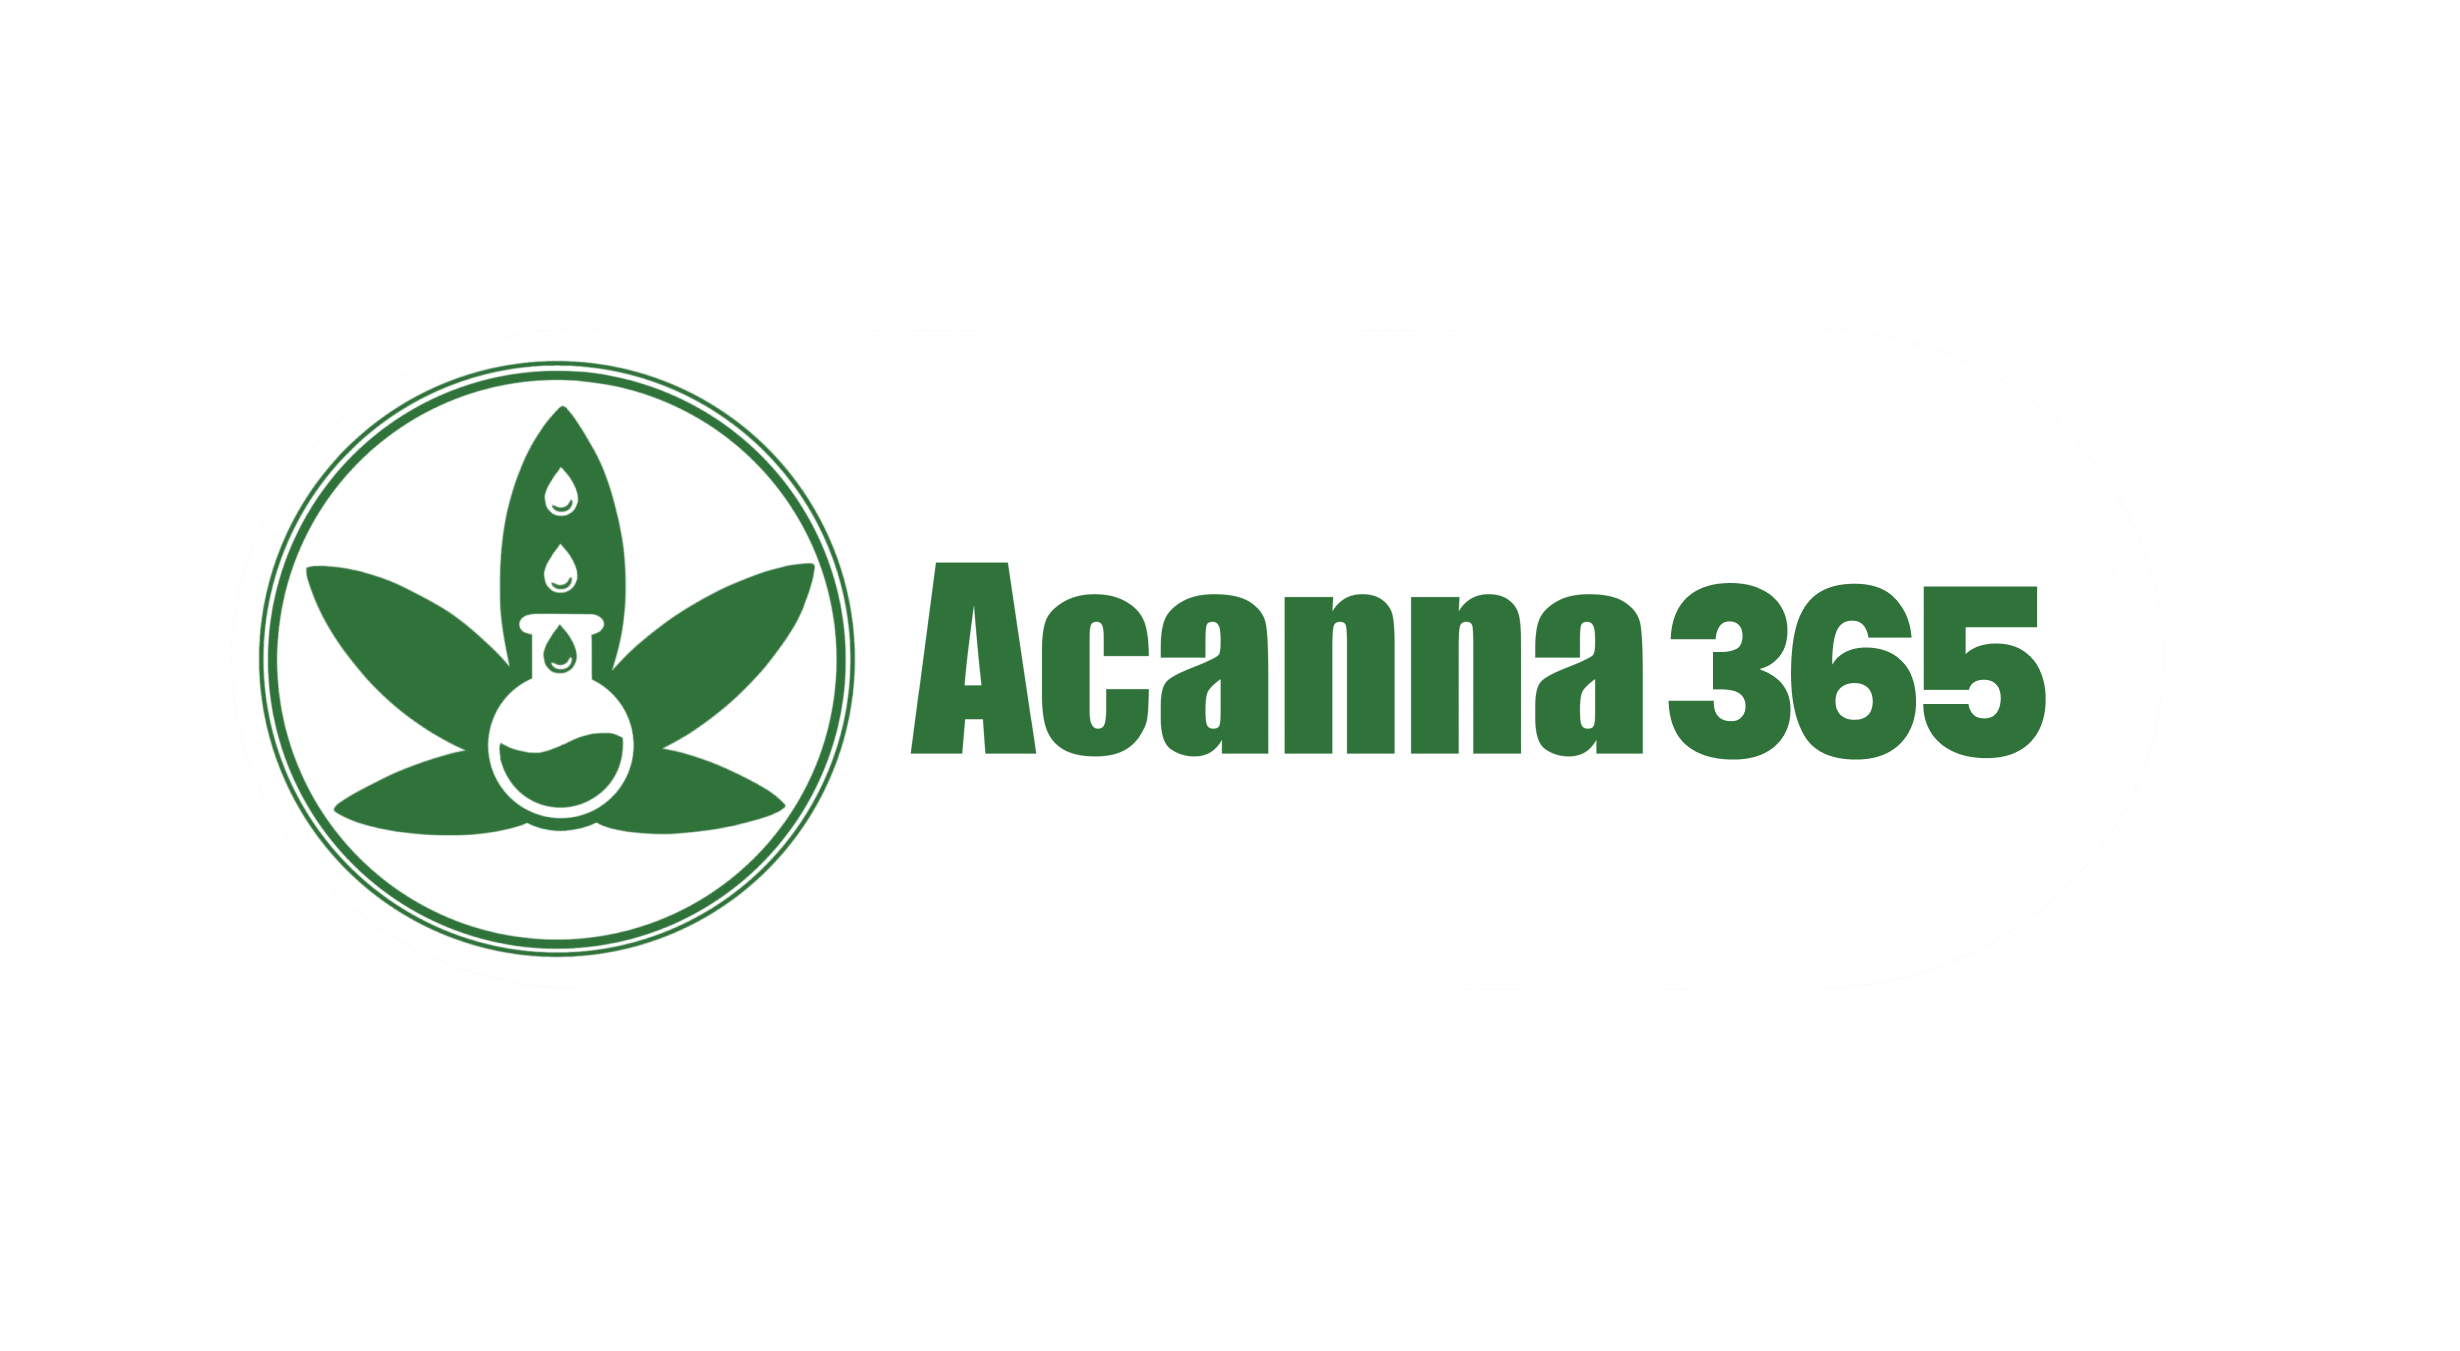 Acanna365